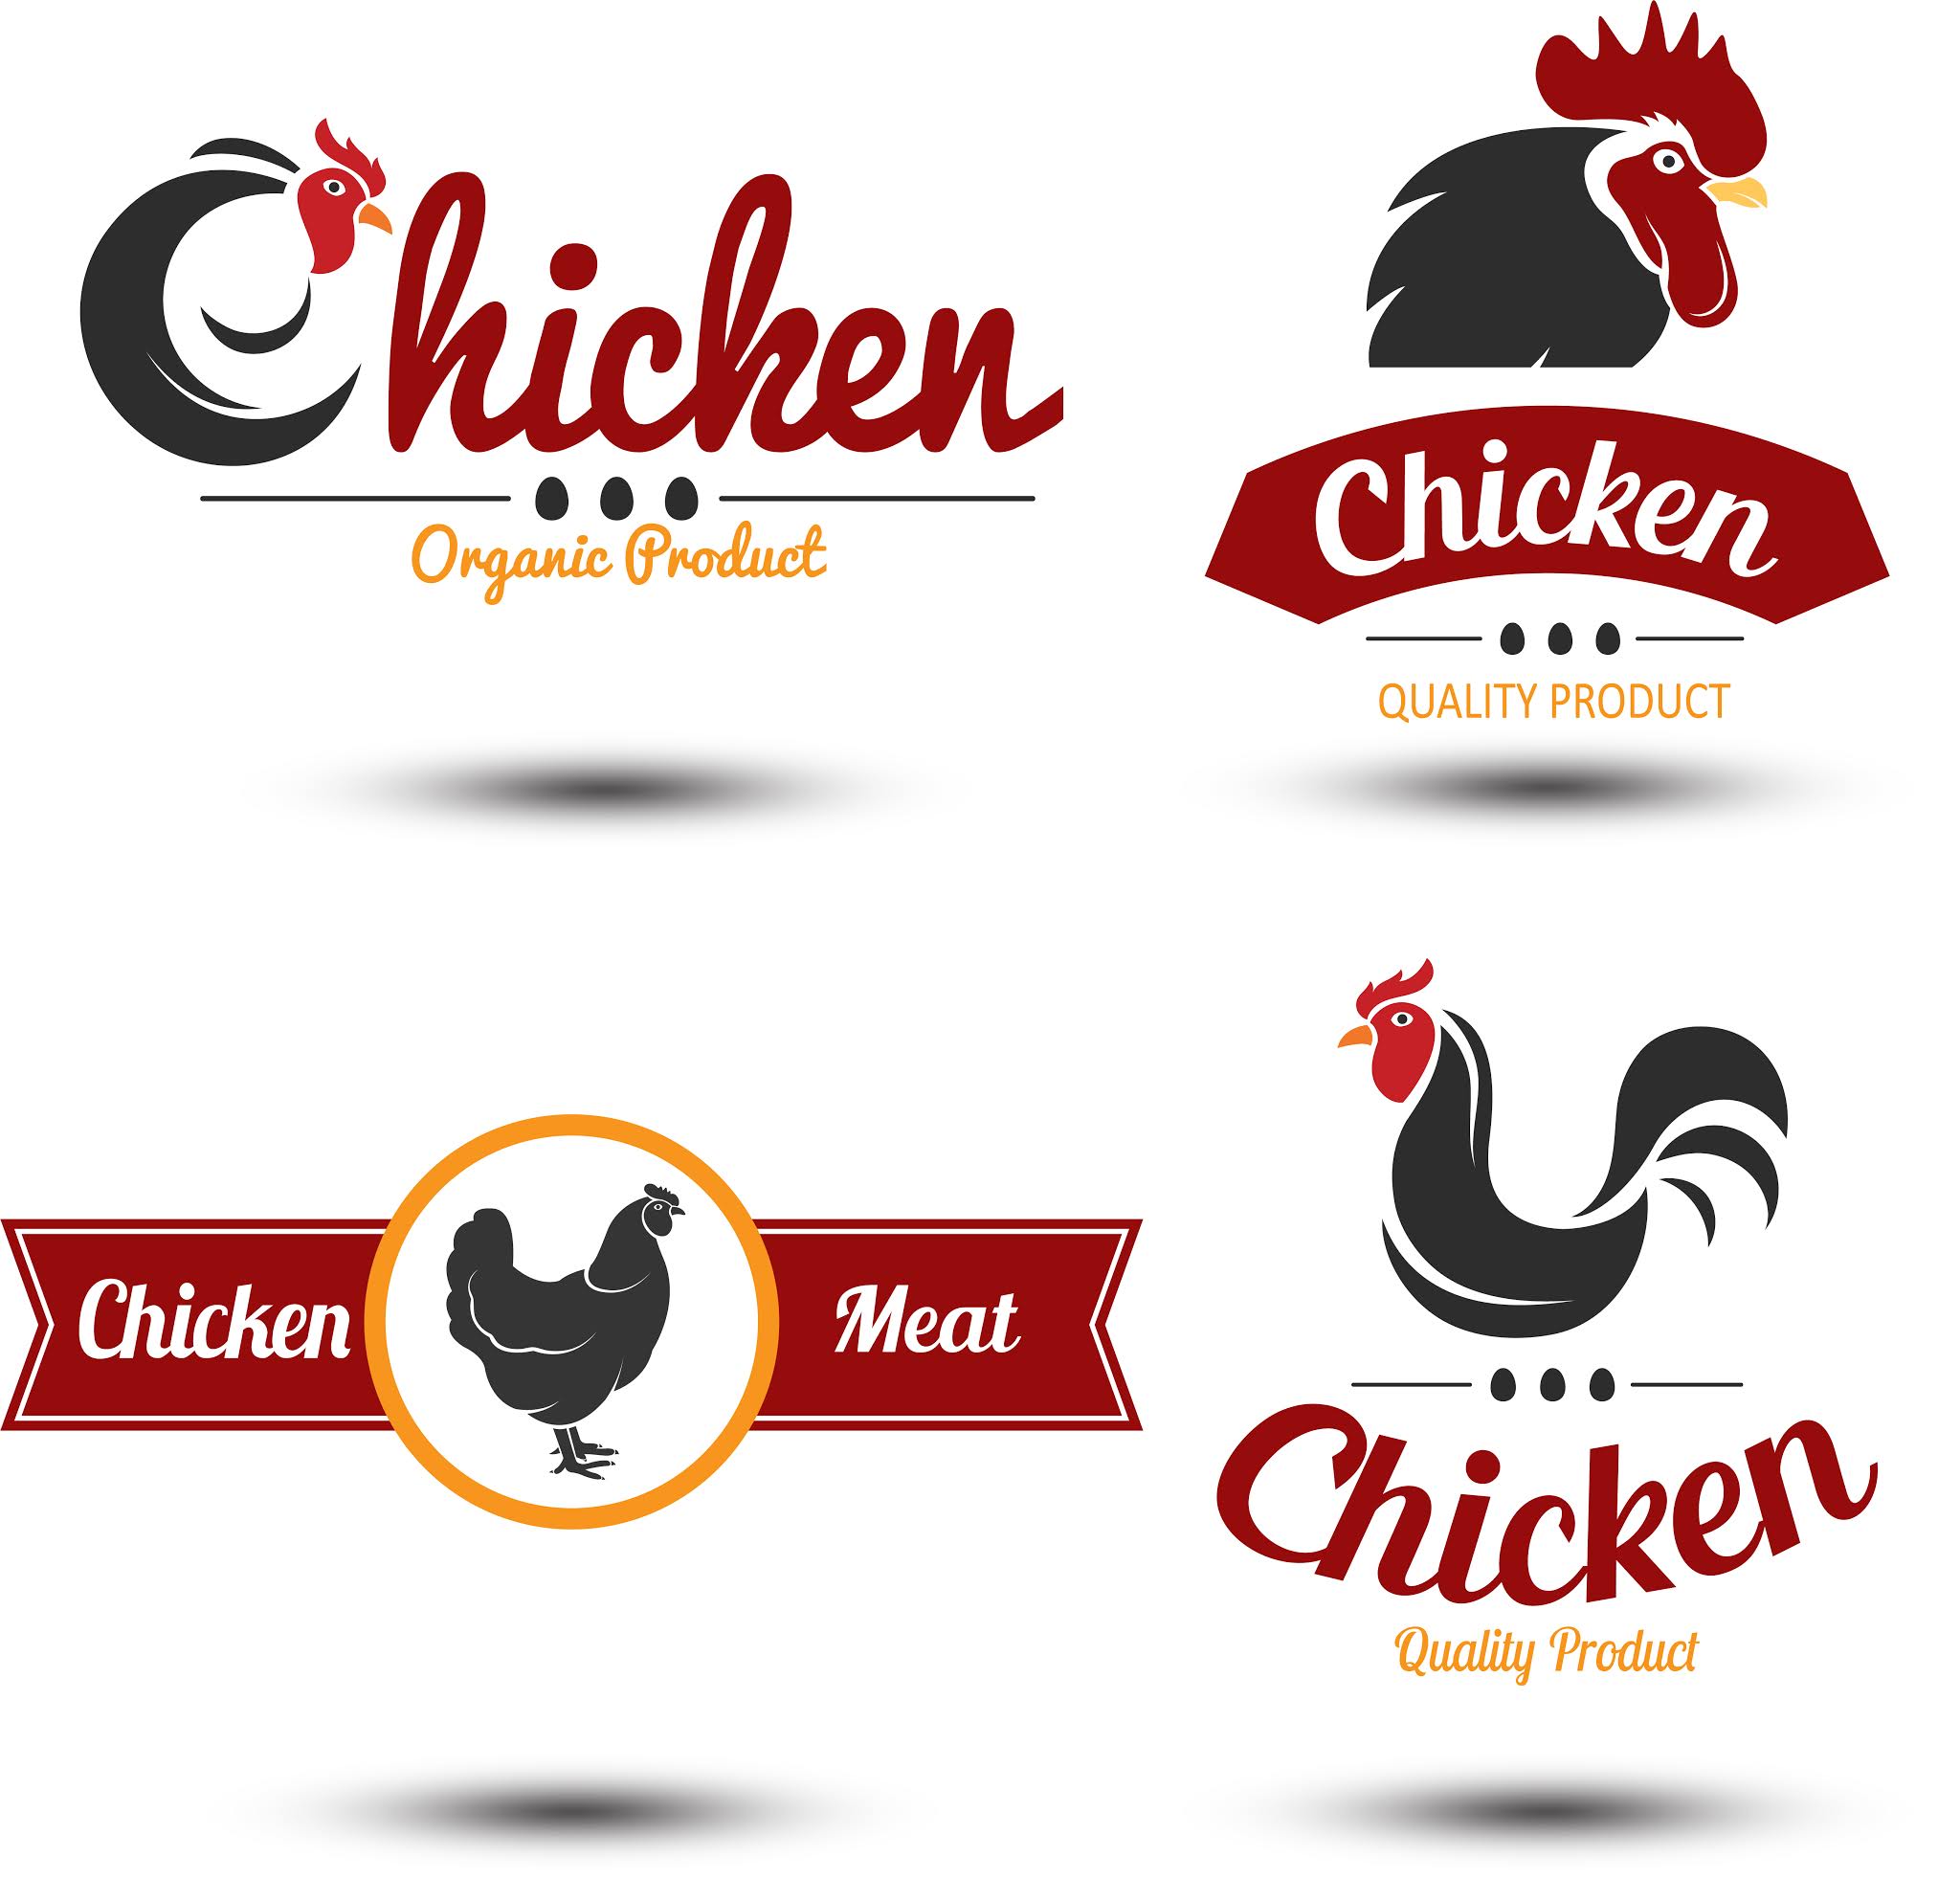 A set of high quality chicken logo designs